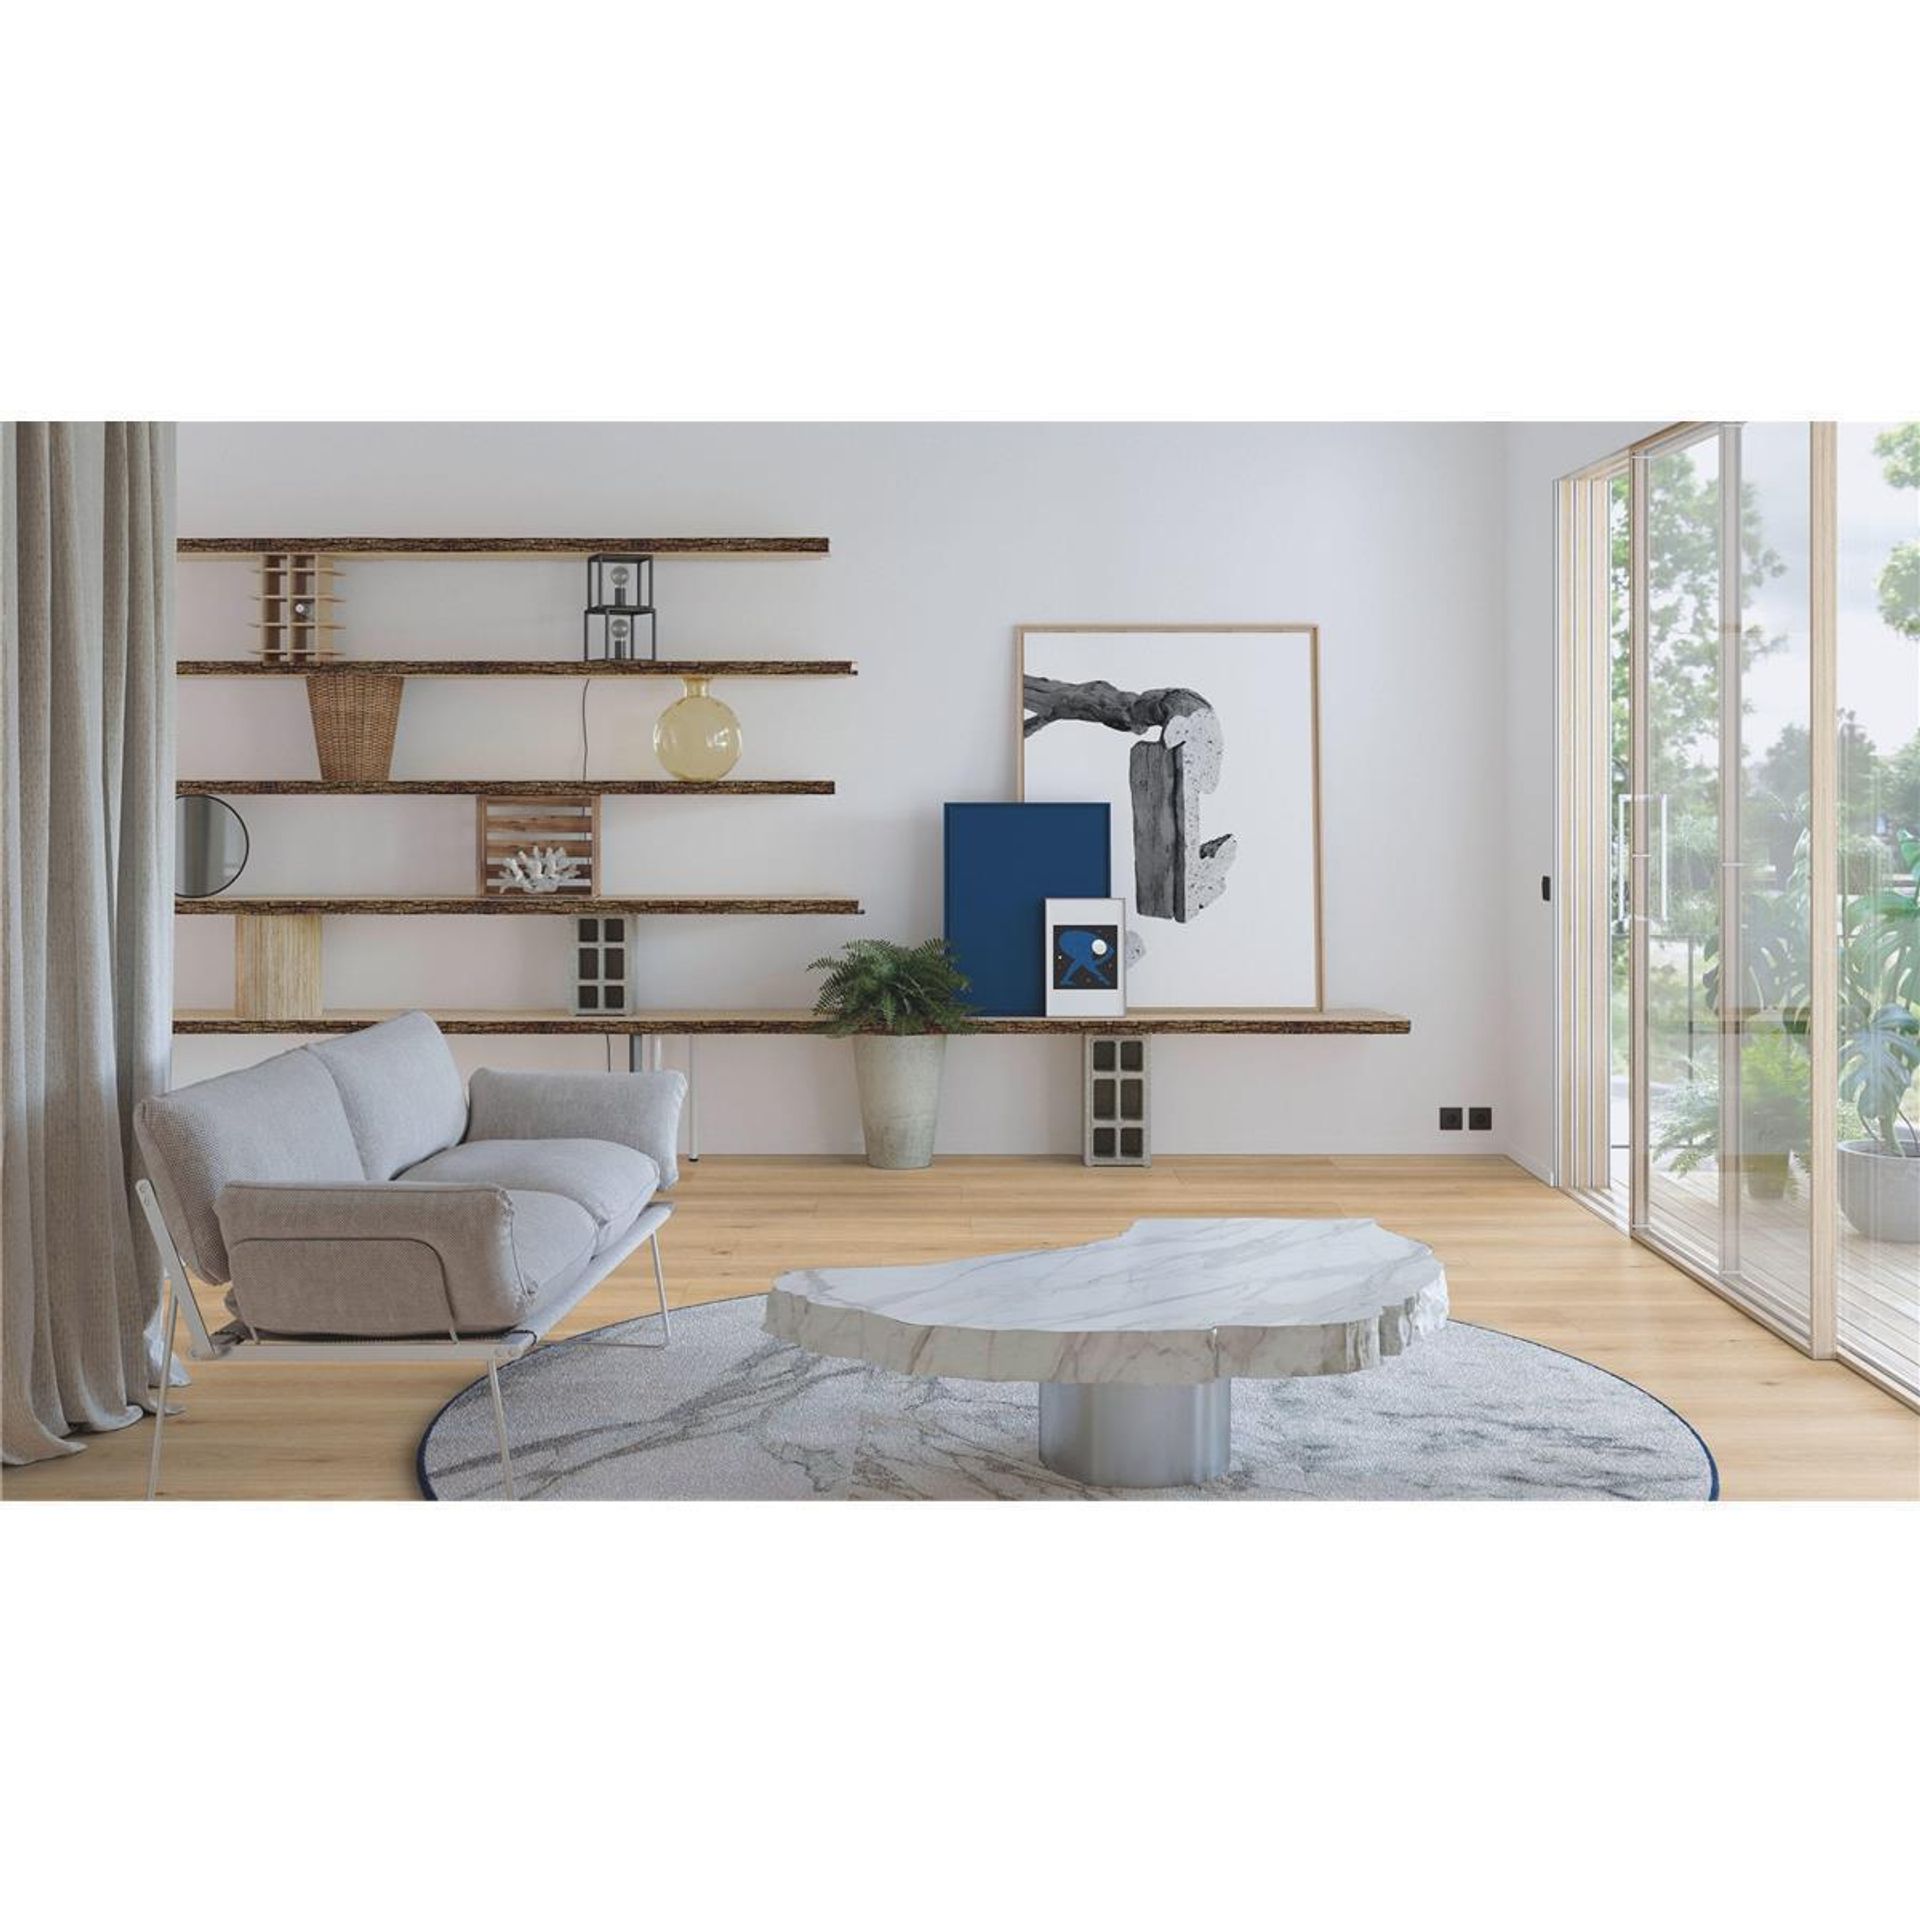 Designboden CLASSICS-Contemporary Oak-Natural Planke 149,1 cm x 24,05 cm - Nutzschichtdicke 0,30 mm